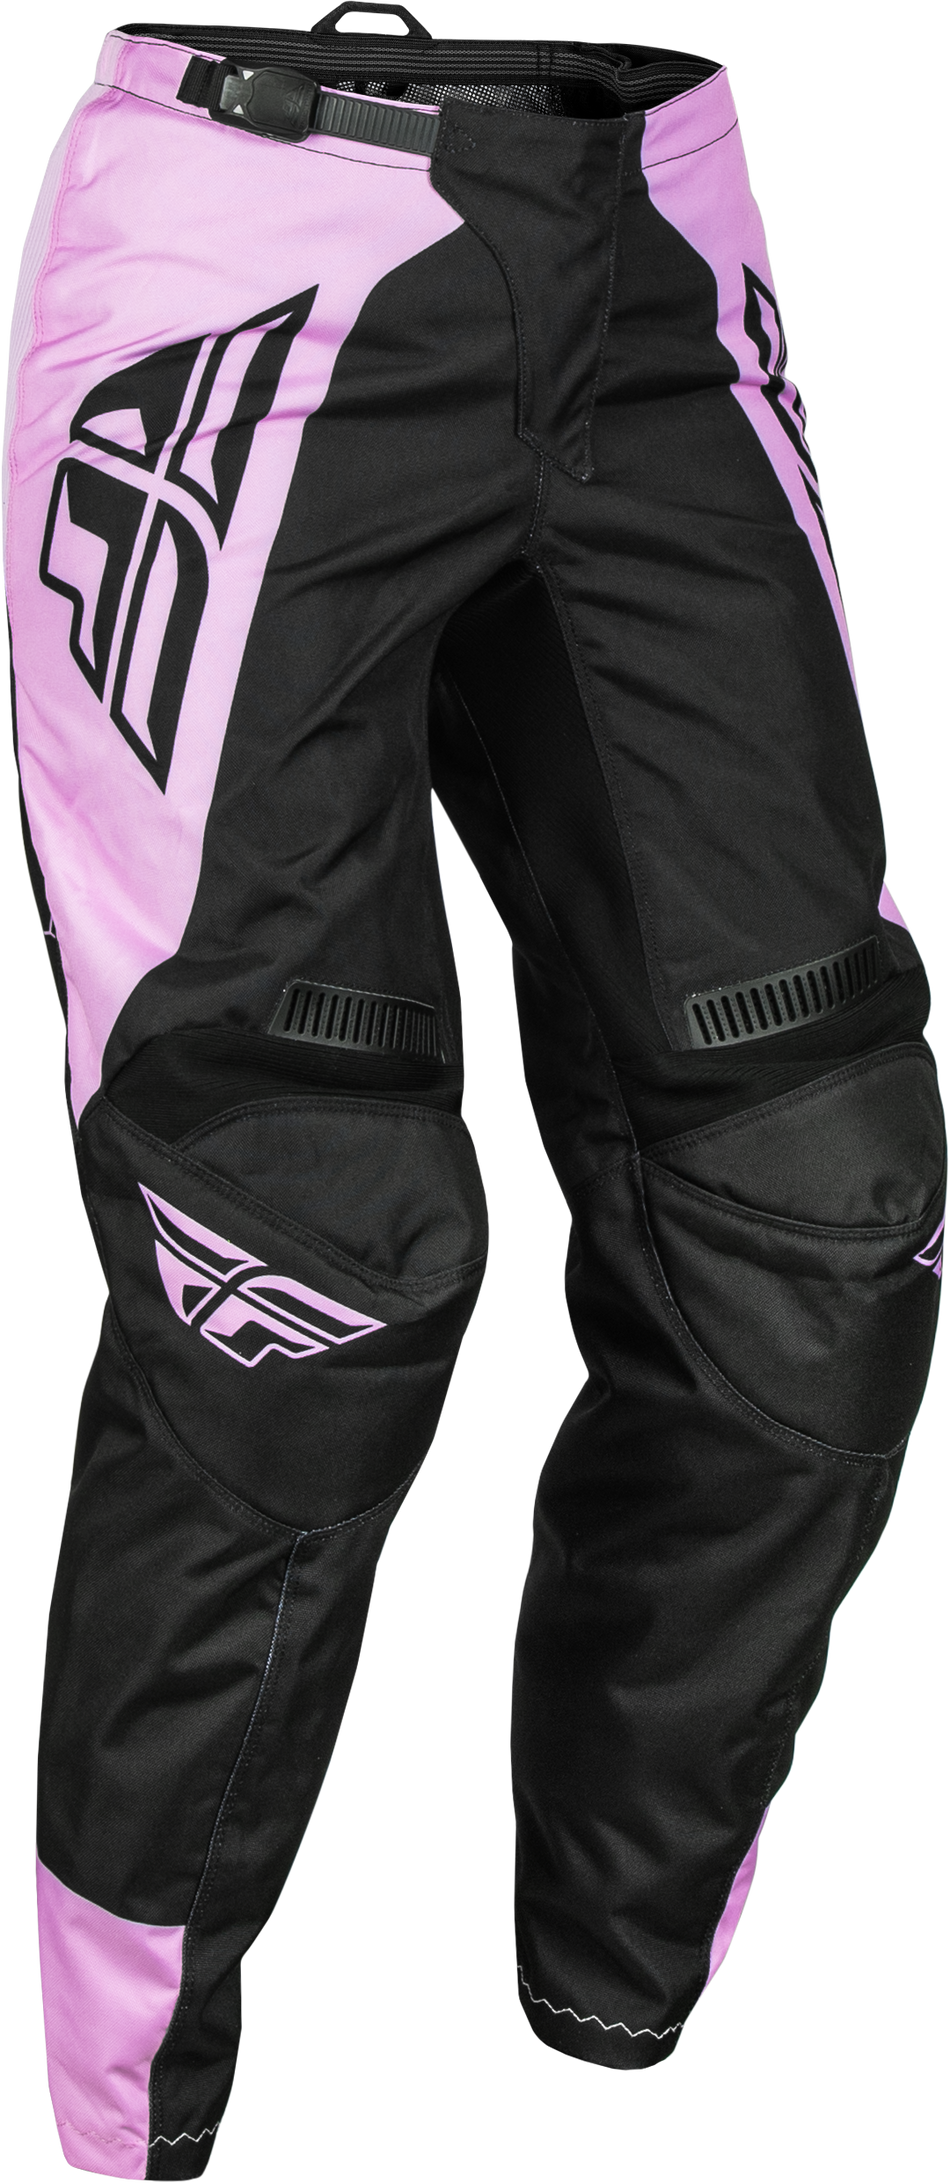 FLY RACING Women's F-16 Pants Black/Lavender Sz 07/08 377-83107